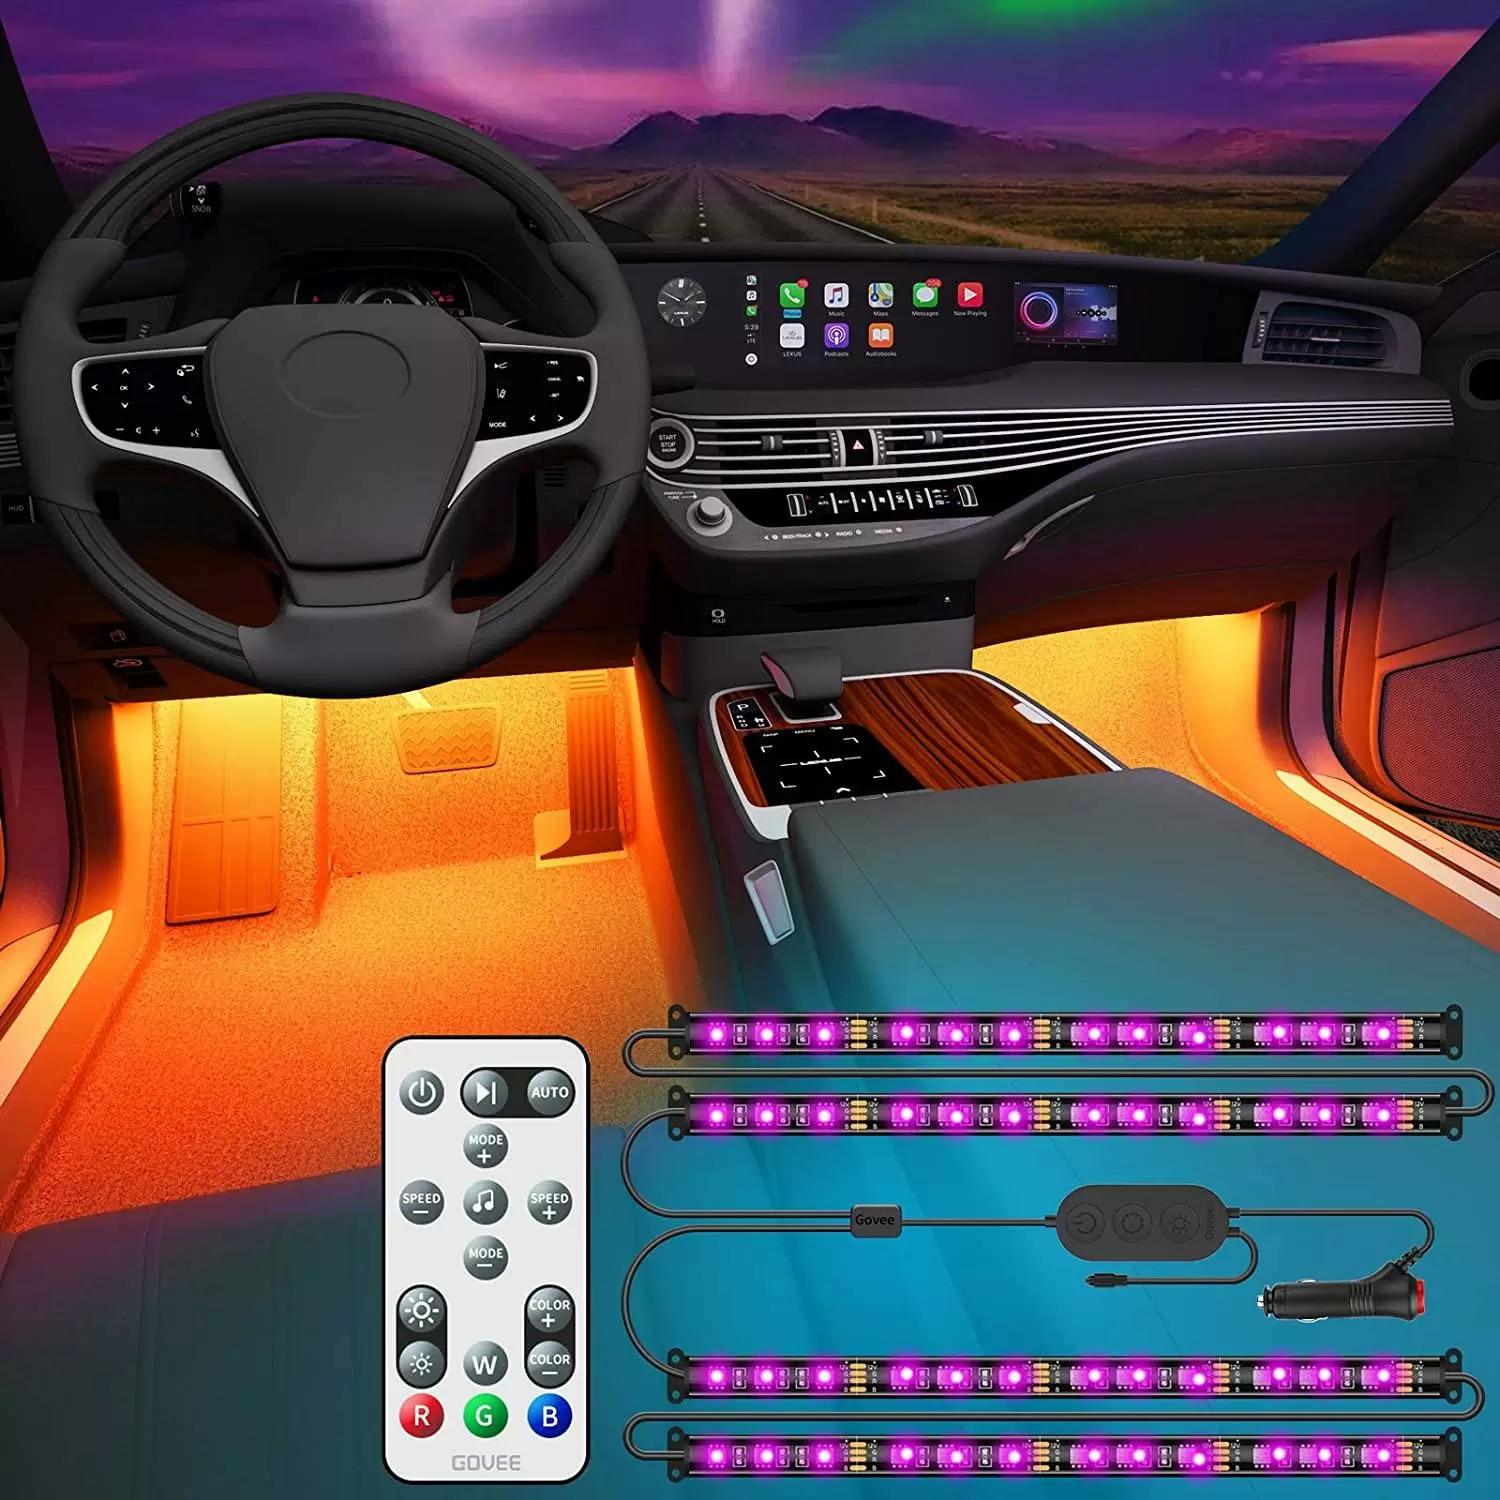 Govee RGB Car LED Light Strips for $6.99 Shipped